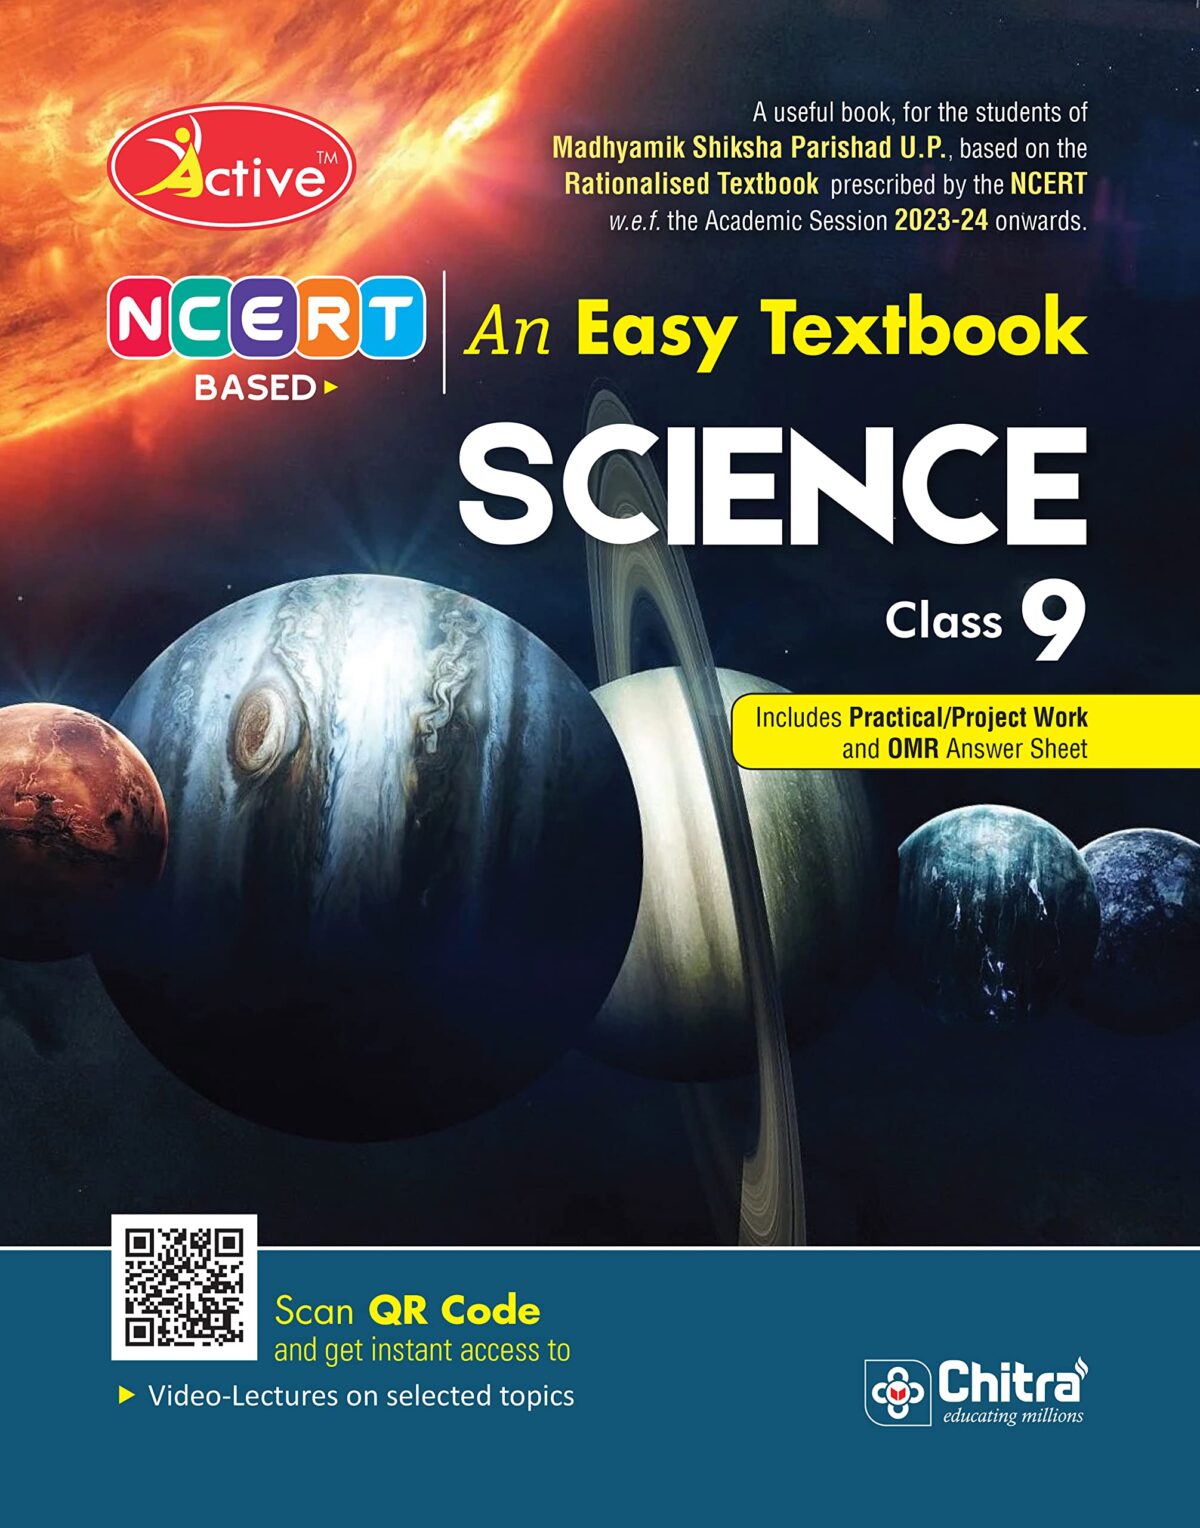 Class 9 Science